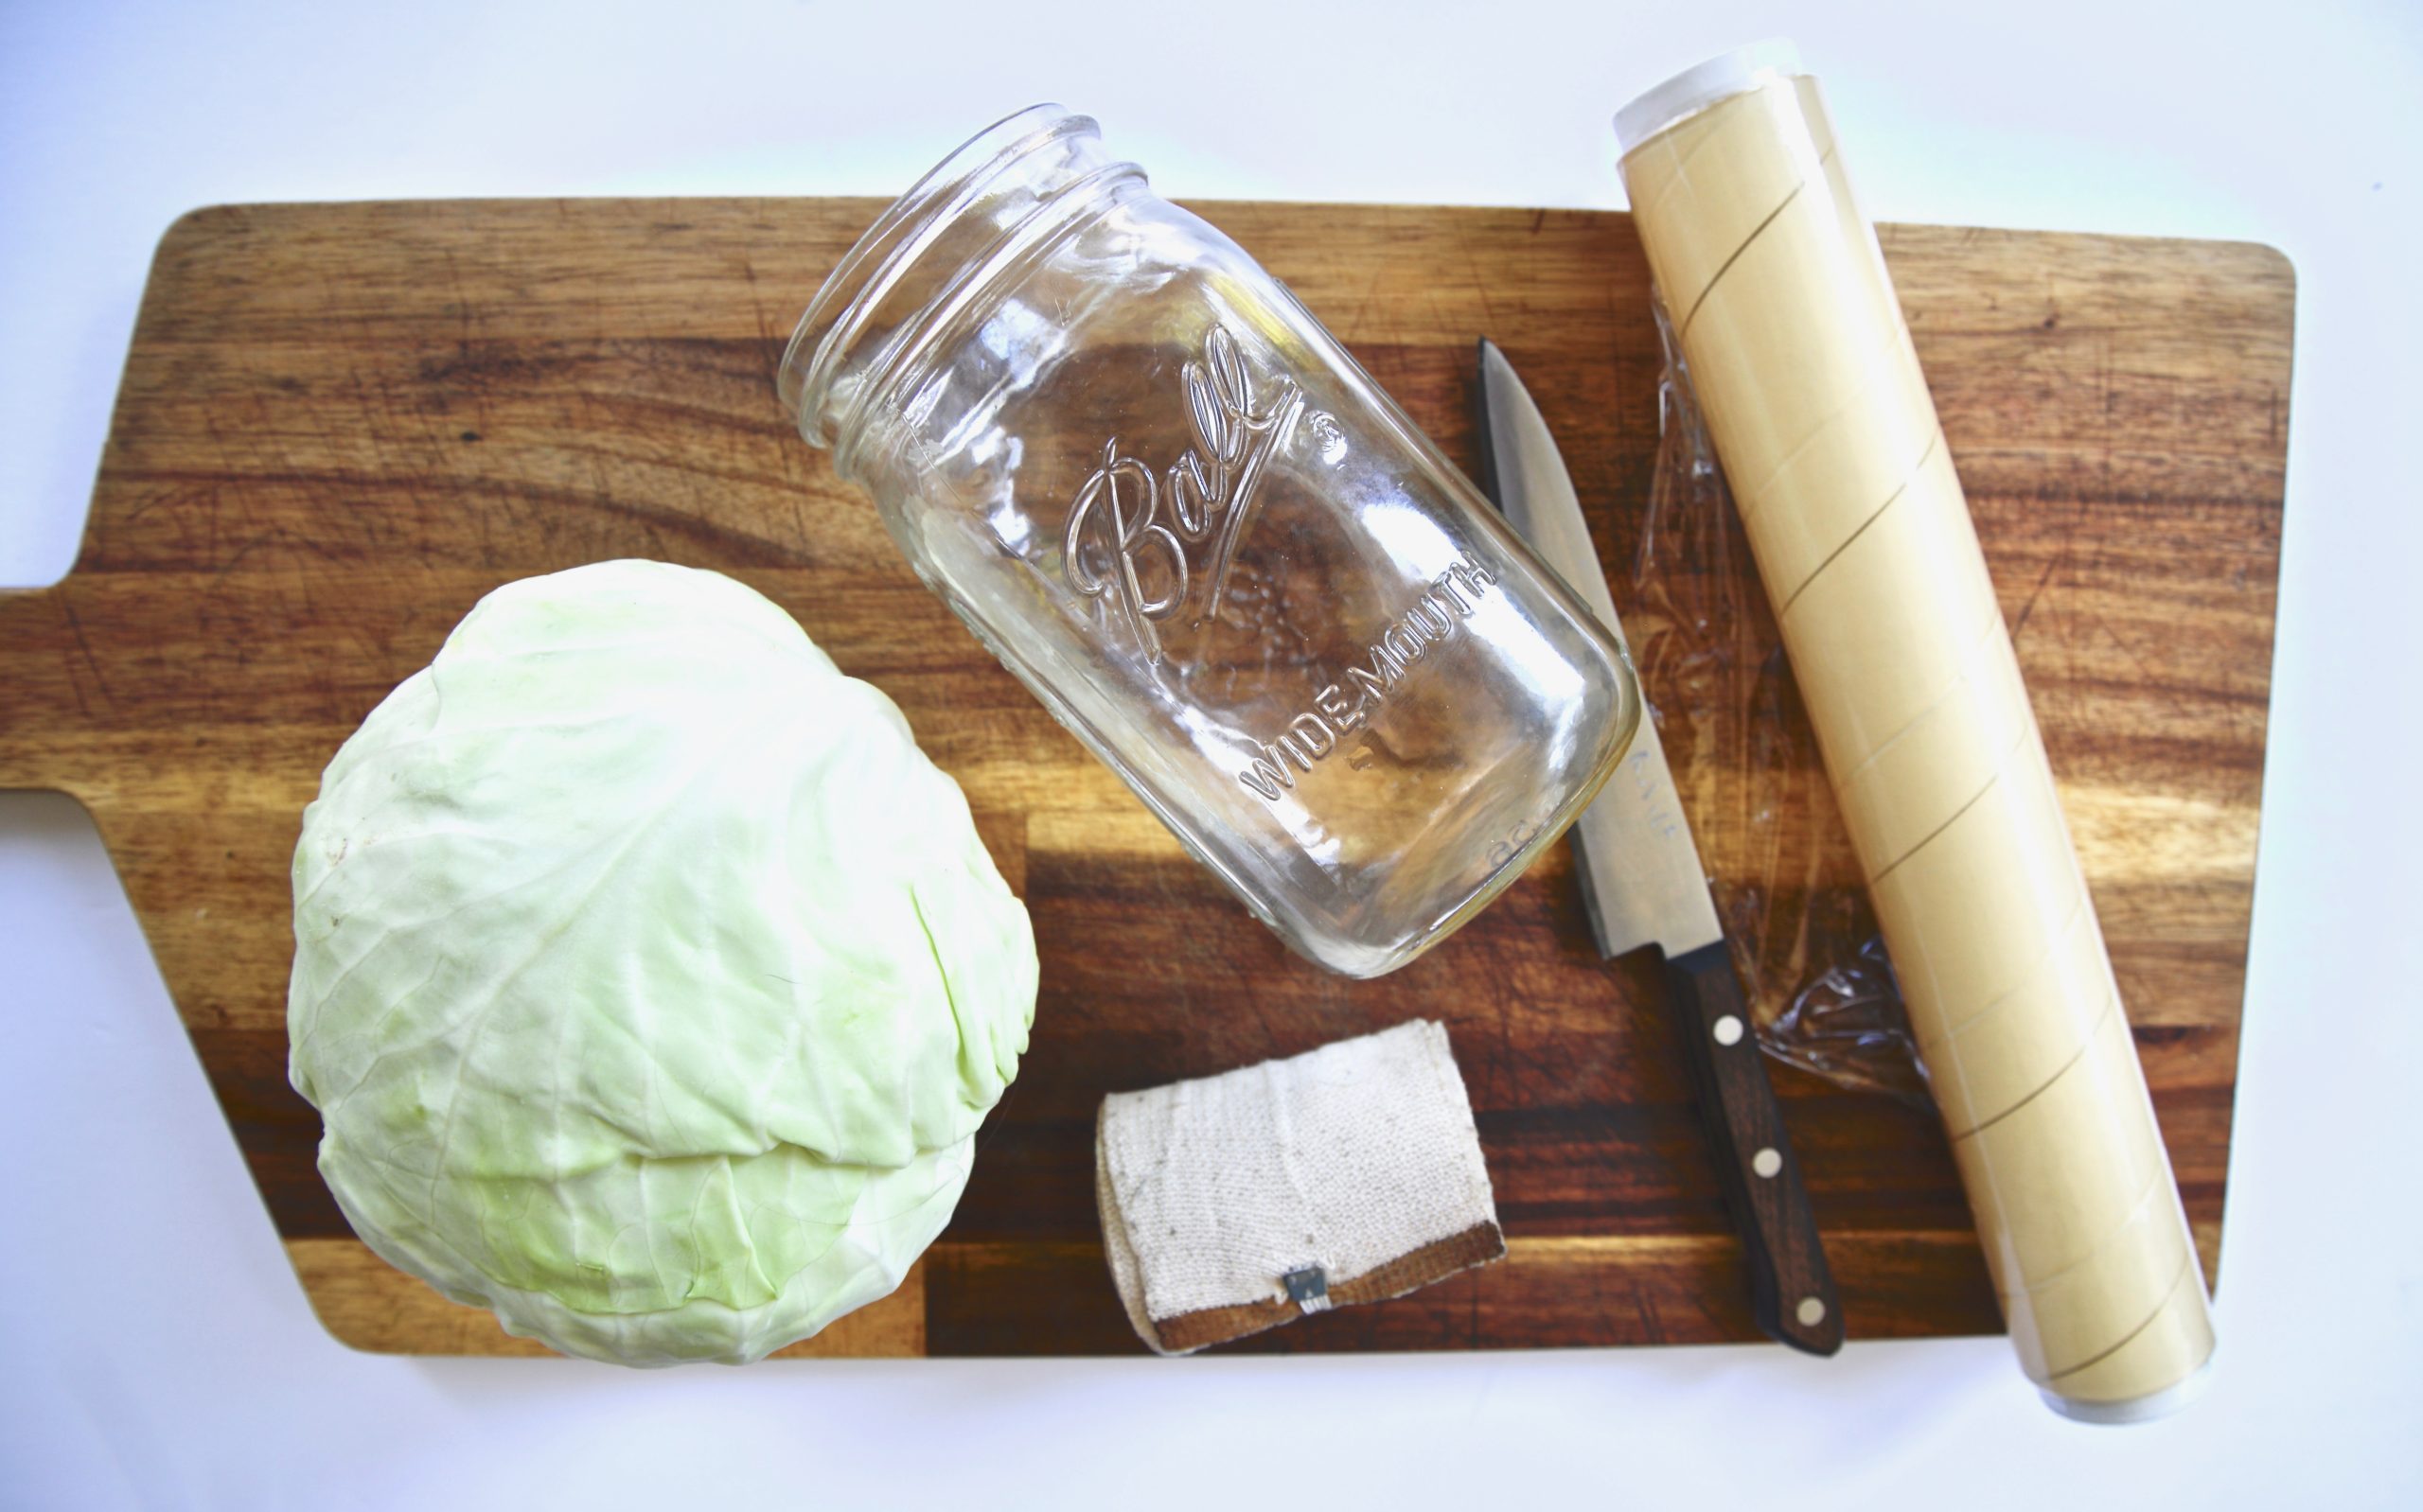 cabbage leaf wrap ingredients